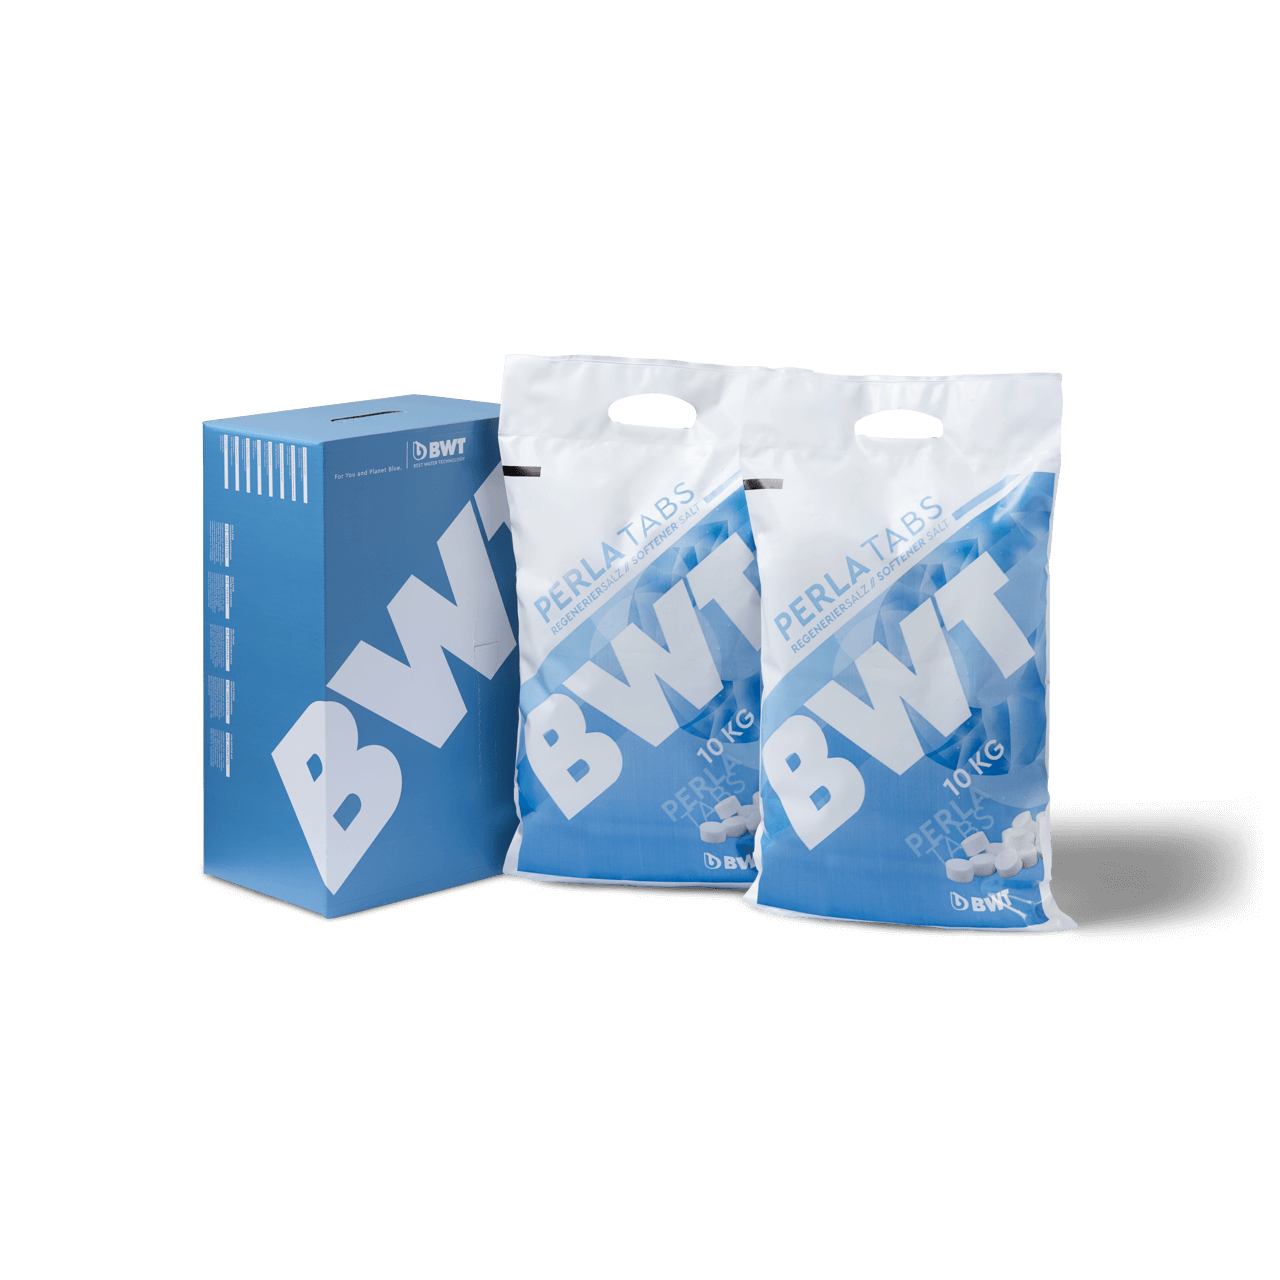 BWT Perla Tabs + Sanitabs im Doppelpack